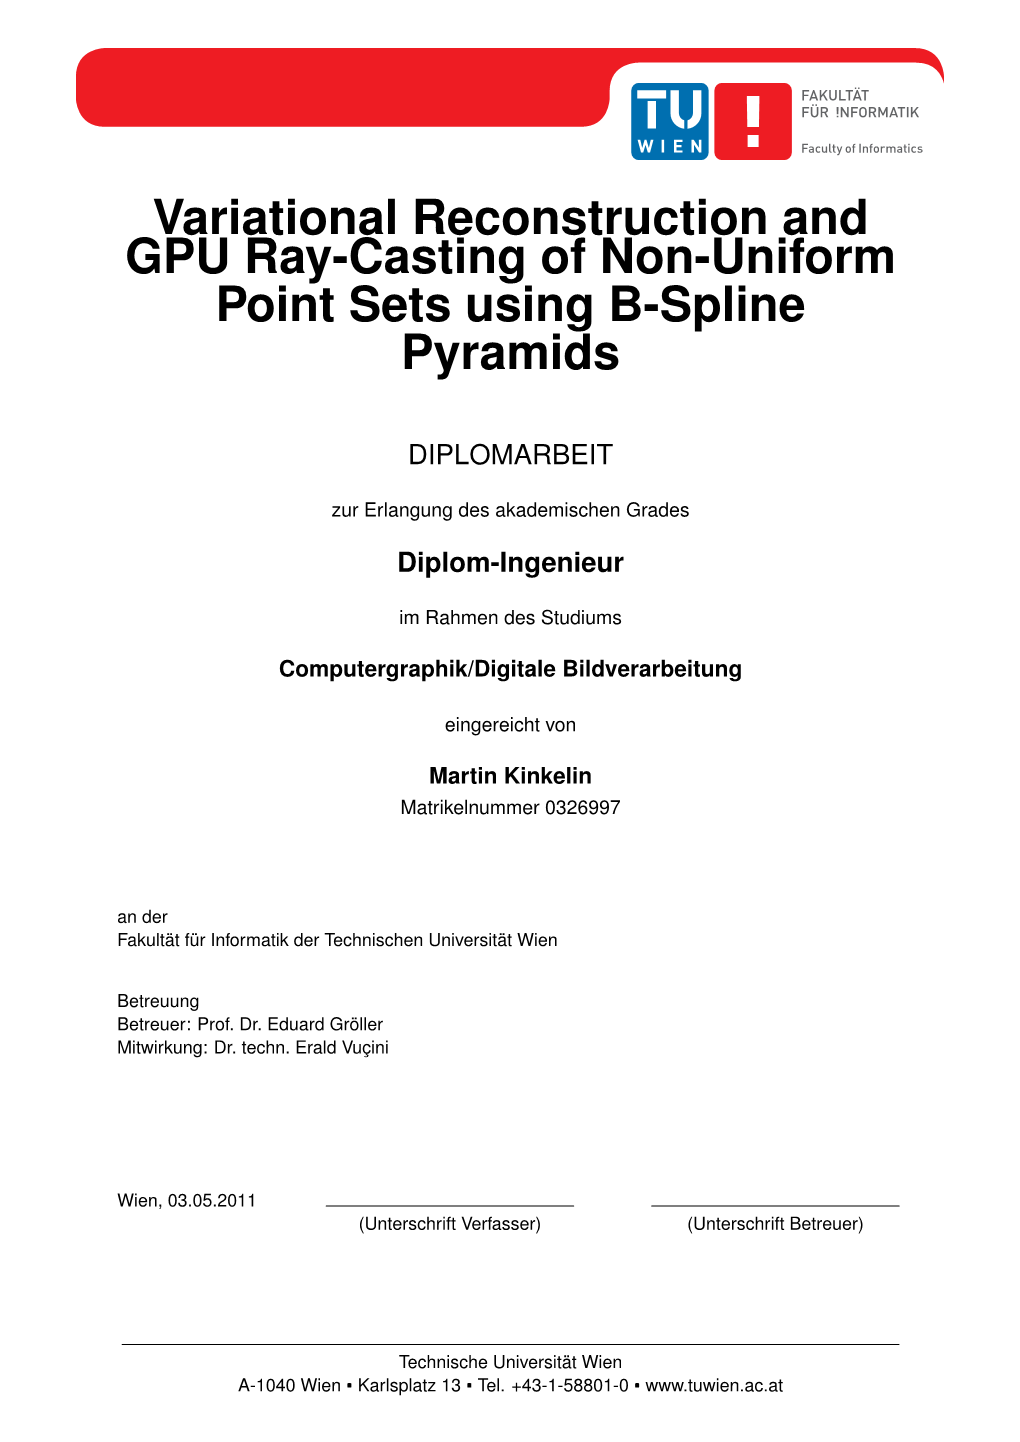 Variational Reconstruction and GPU Ray-Casting of Non-Uniform Point Sets Using B-Spline Pyramids